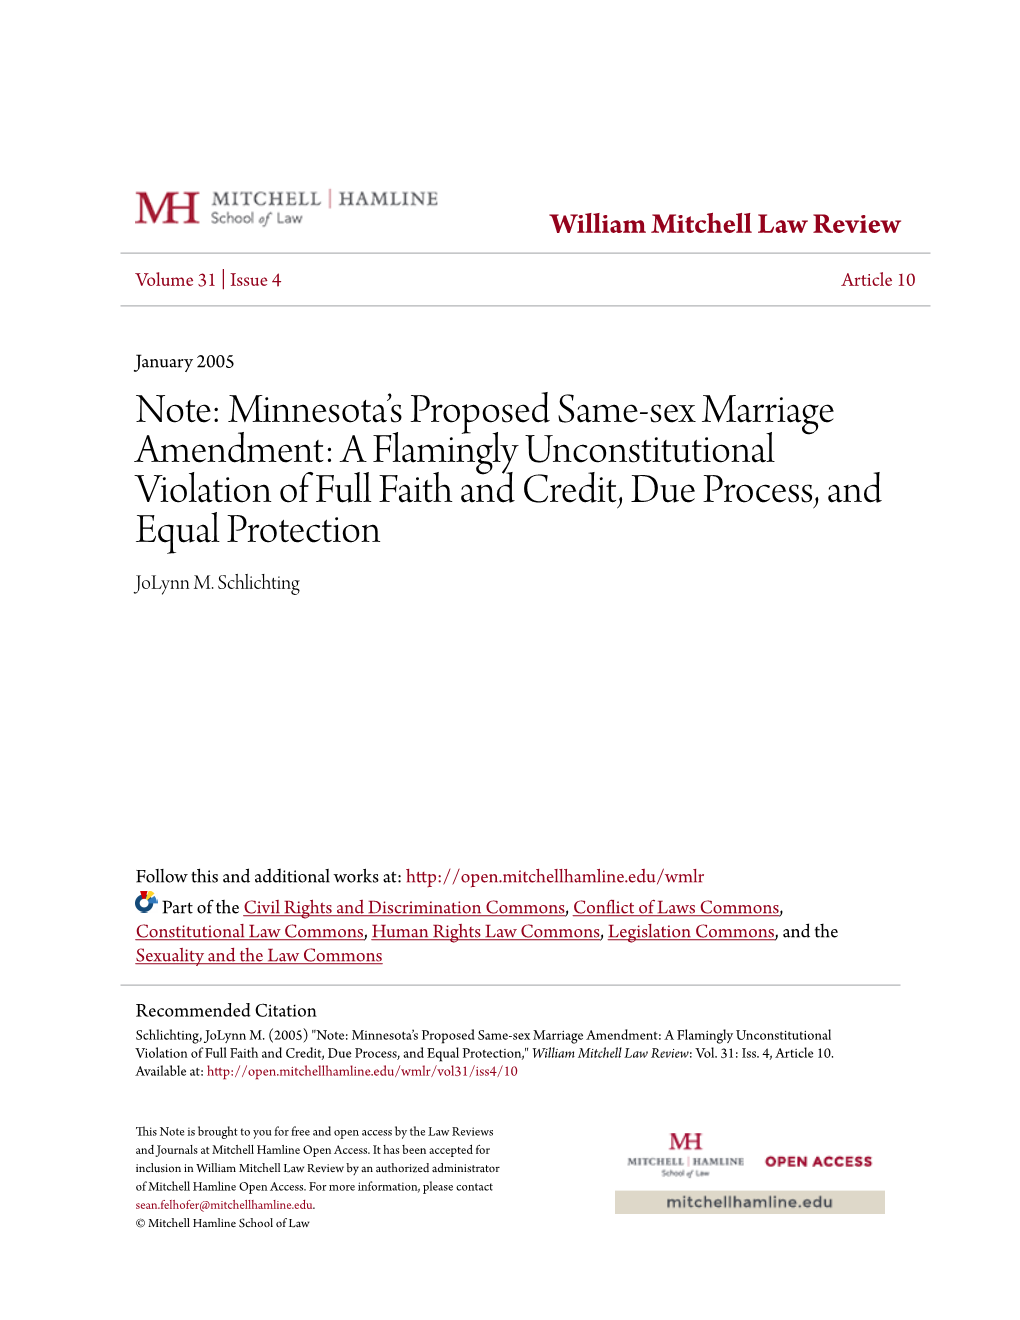 Note: Minnesota's Proposed Same-Sex Marriage Amendment: A